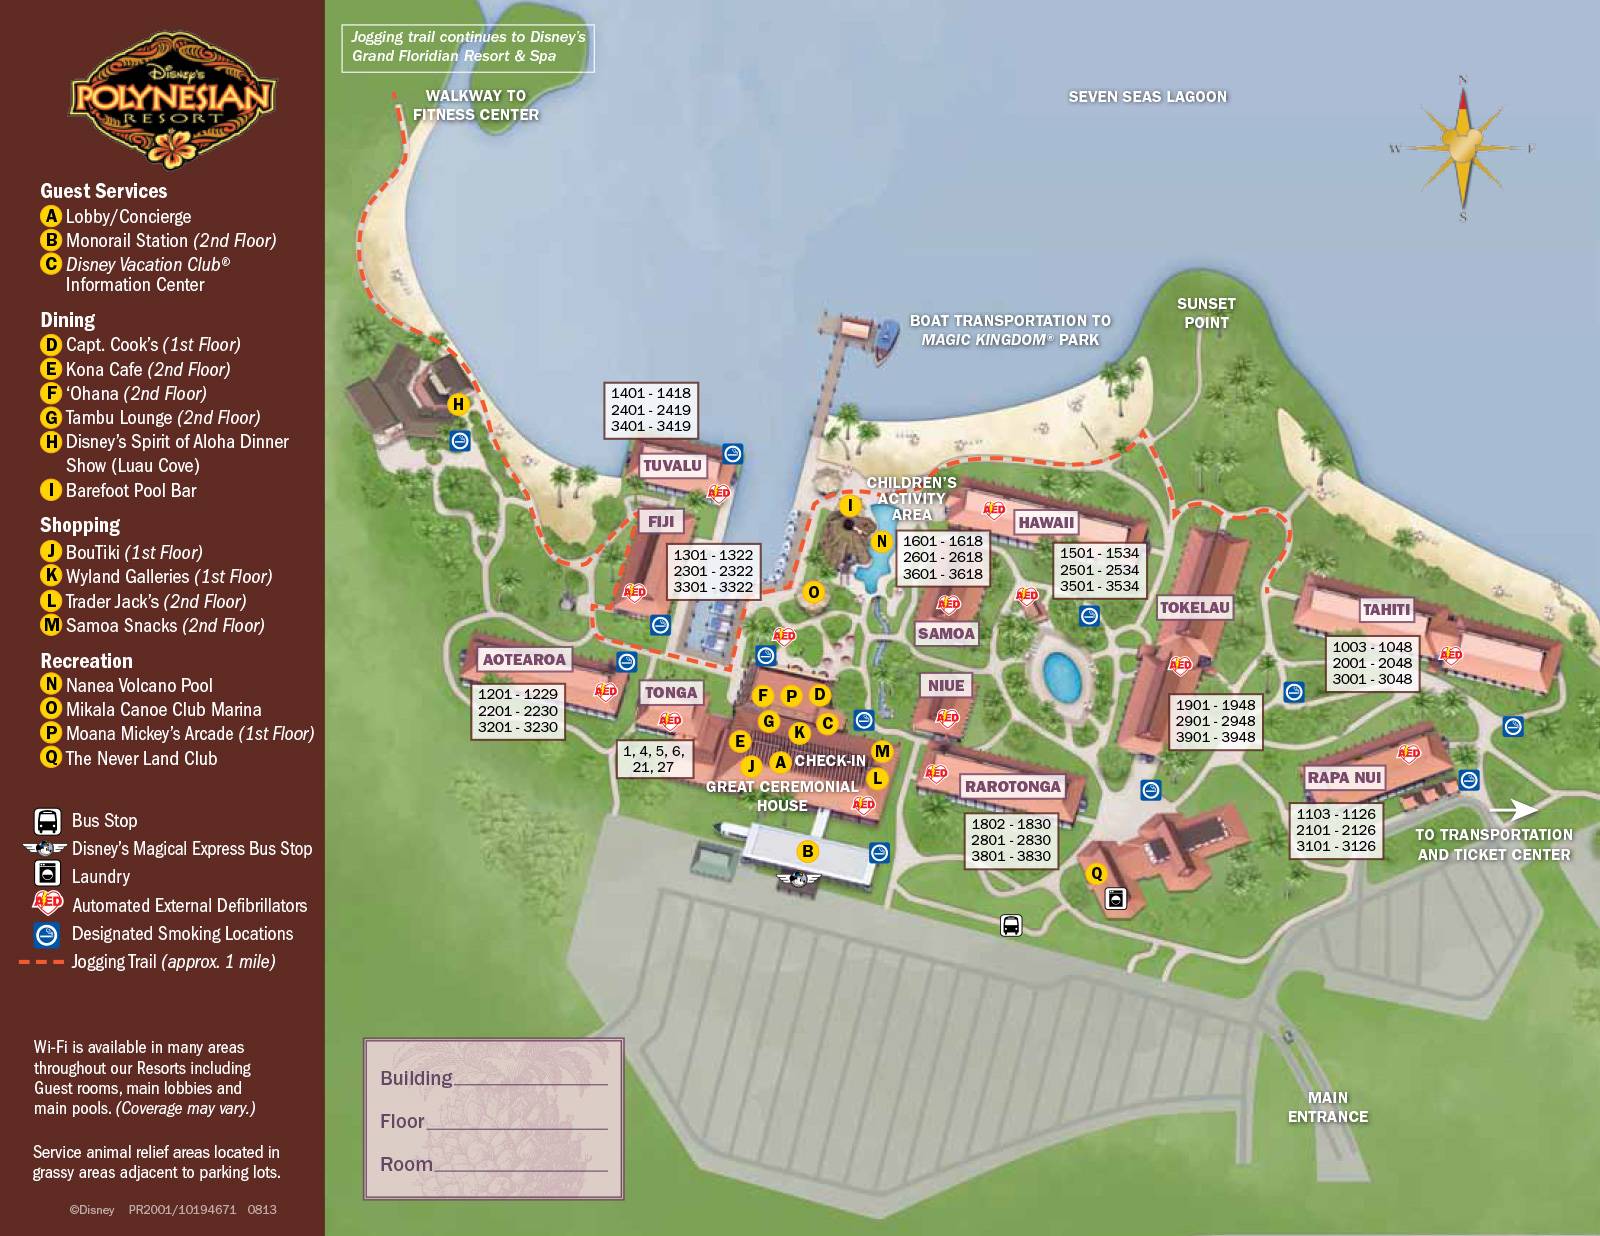 2013 Polynesian Resort guide map